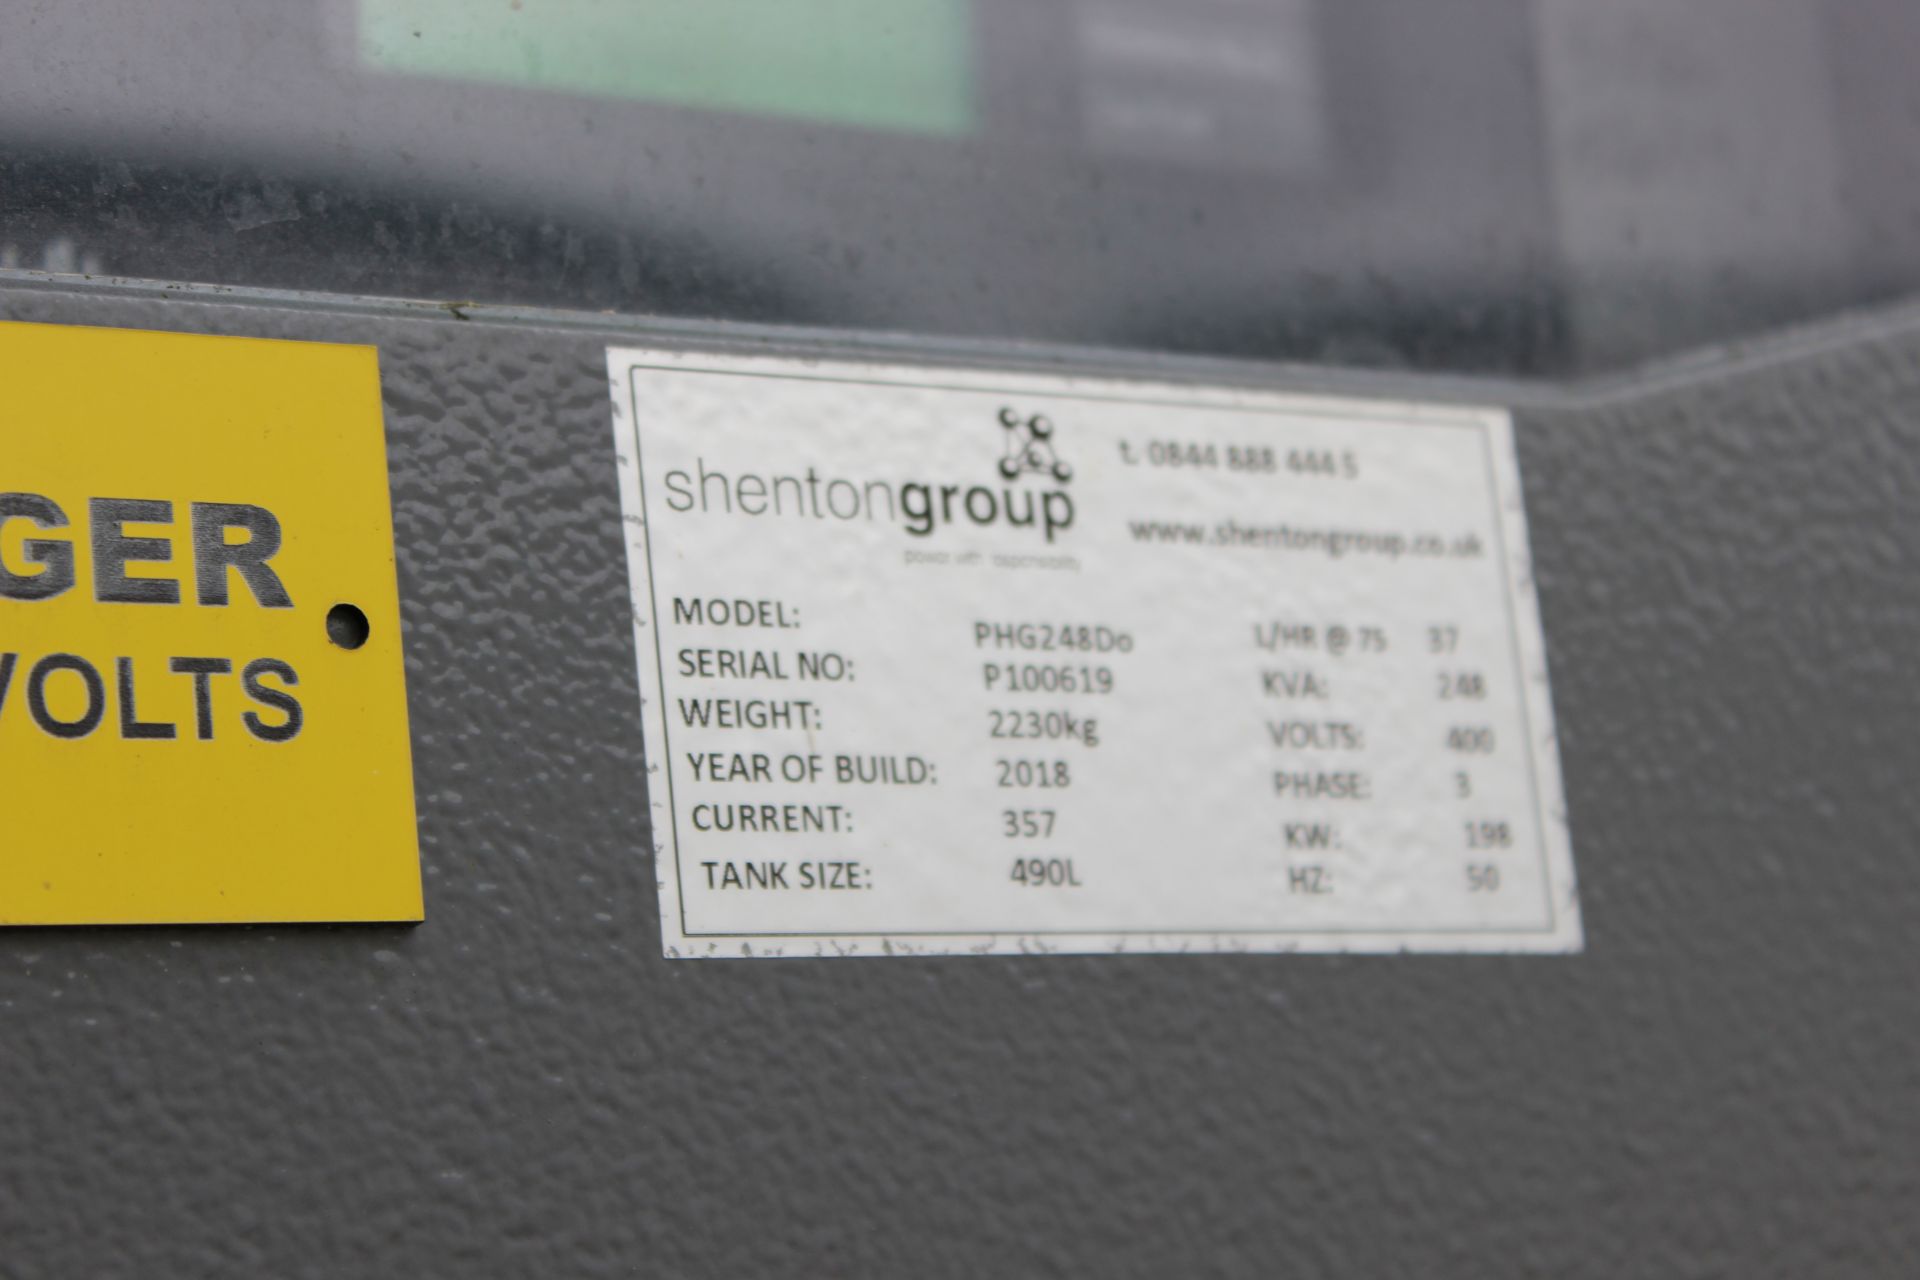 Shenton PHG 248DO 248 Kva diesel generator - Image 5 of 5